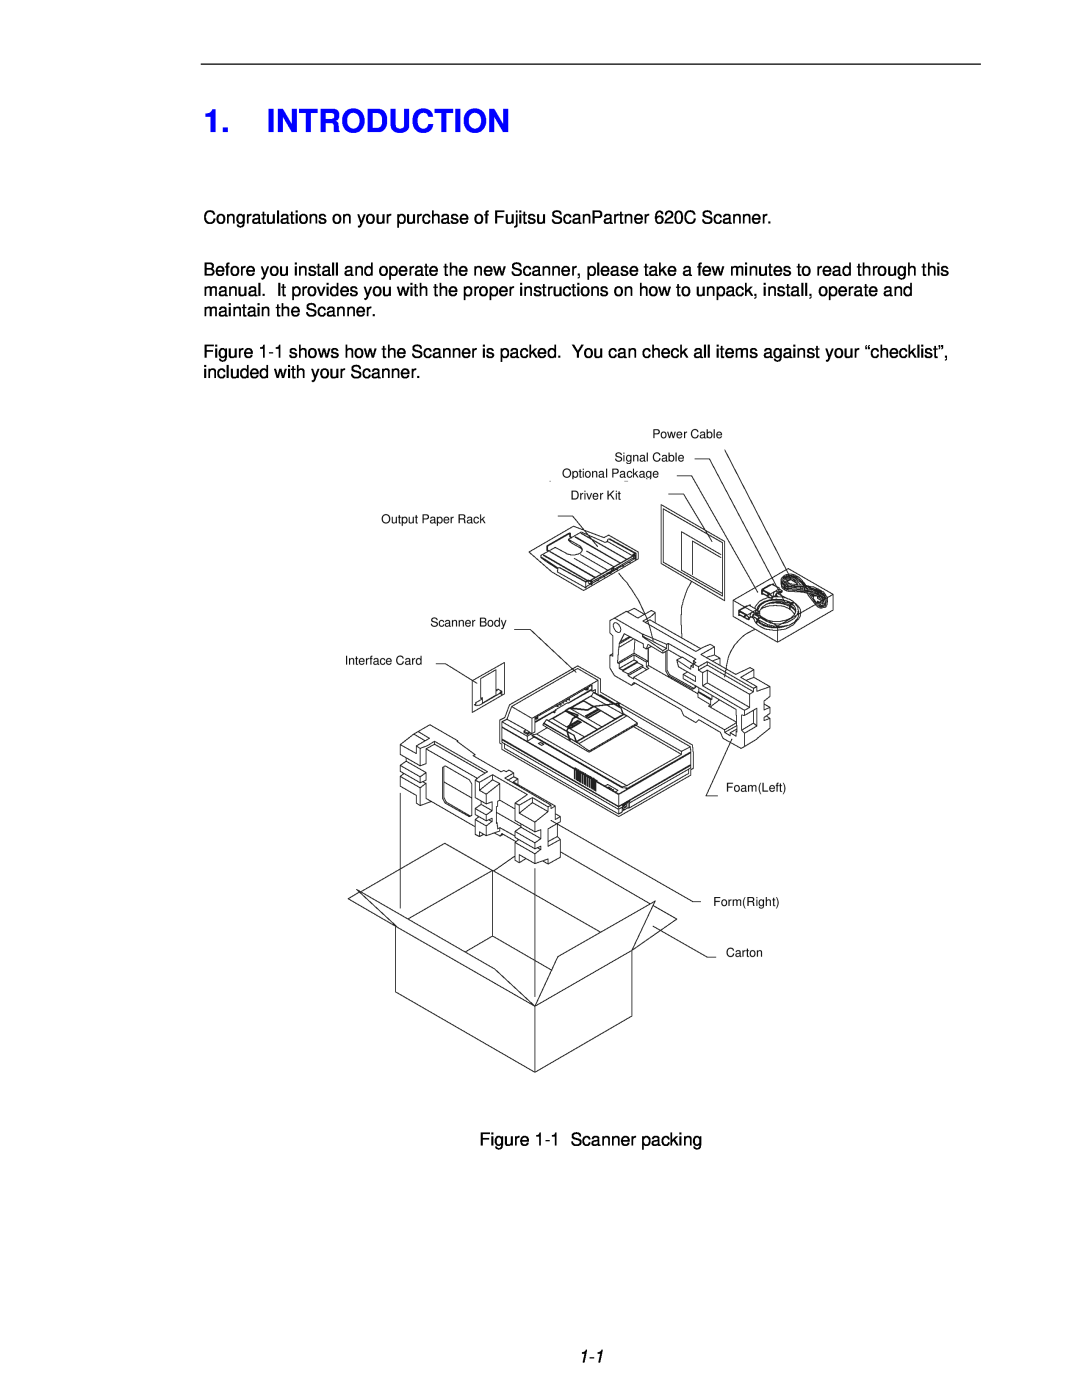 Fujitsu 620C user manual Introduction 